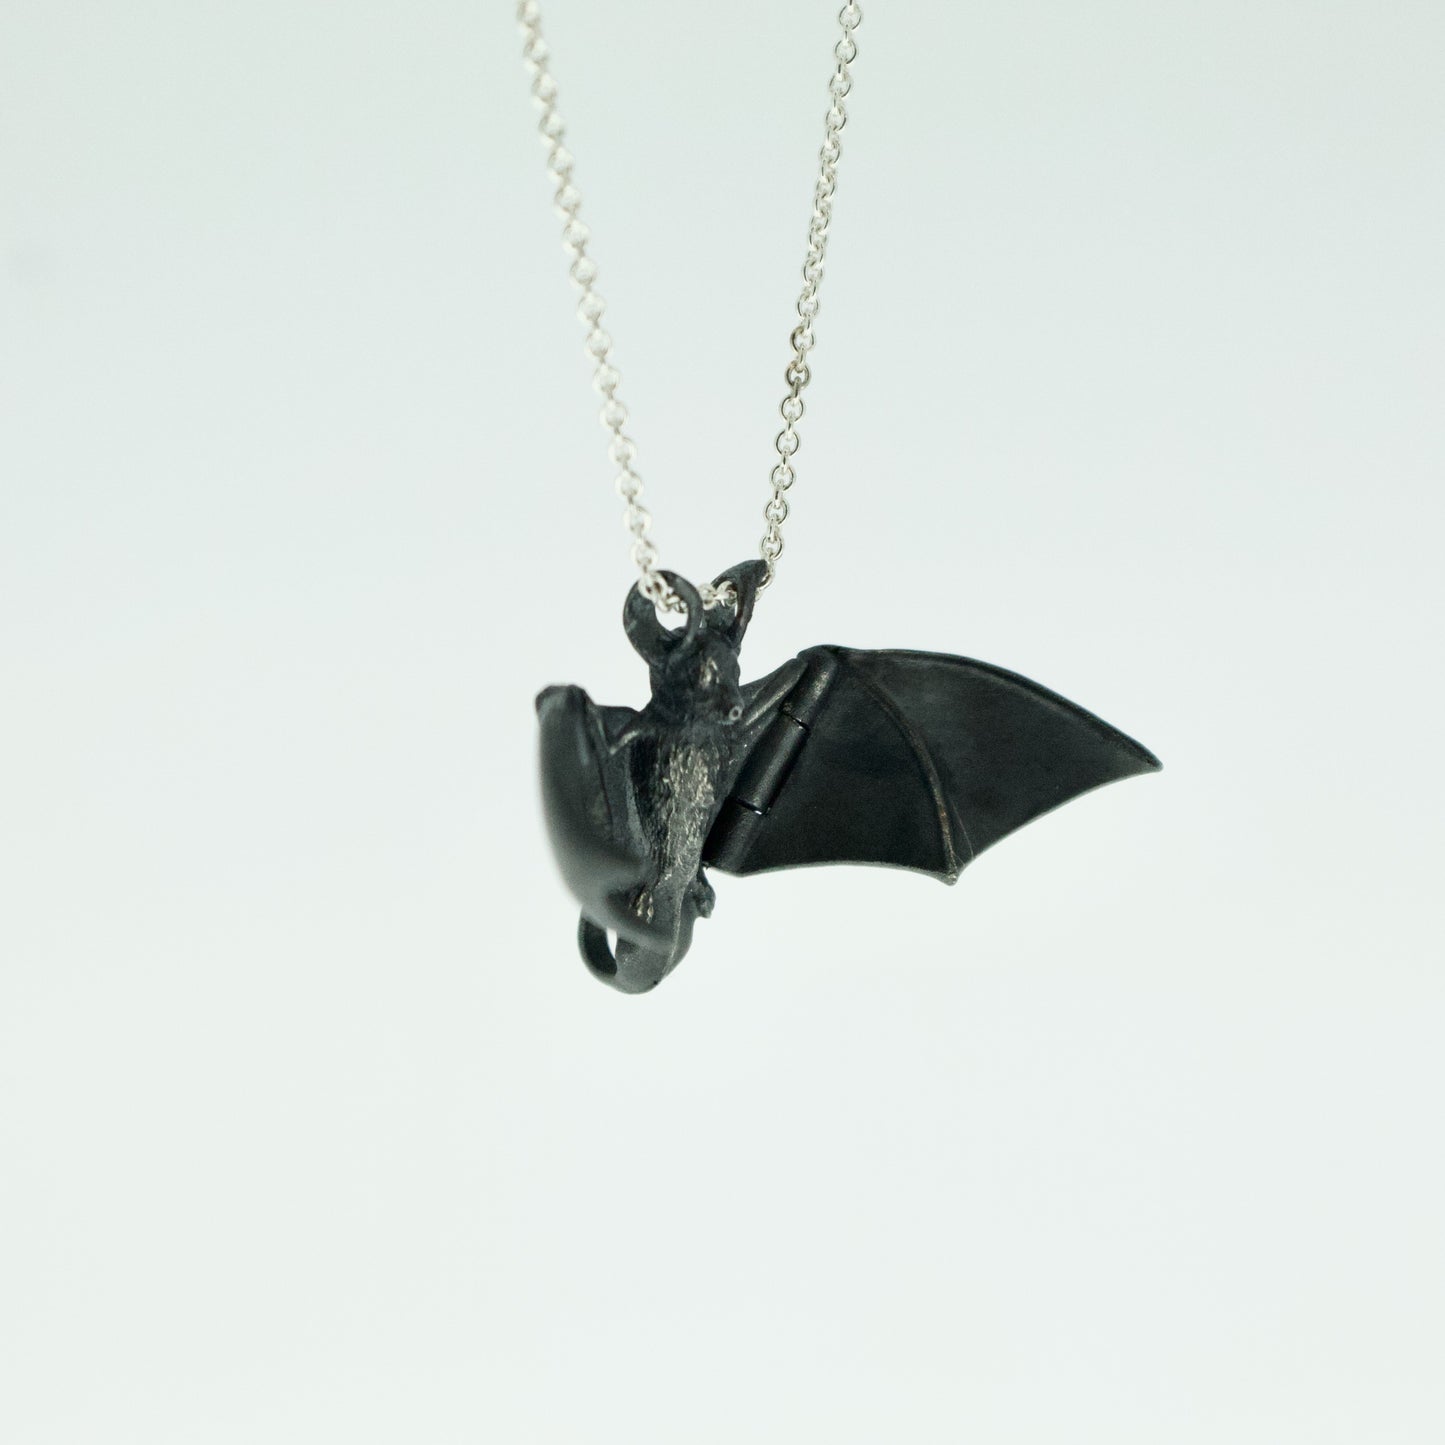 'Anhänger Fledermaus' Bat Pendant - Oxidised 925 Silver